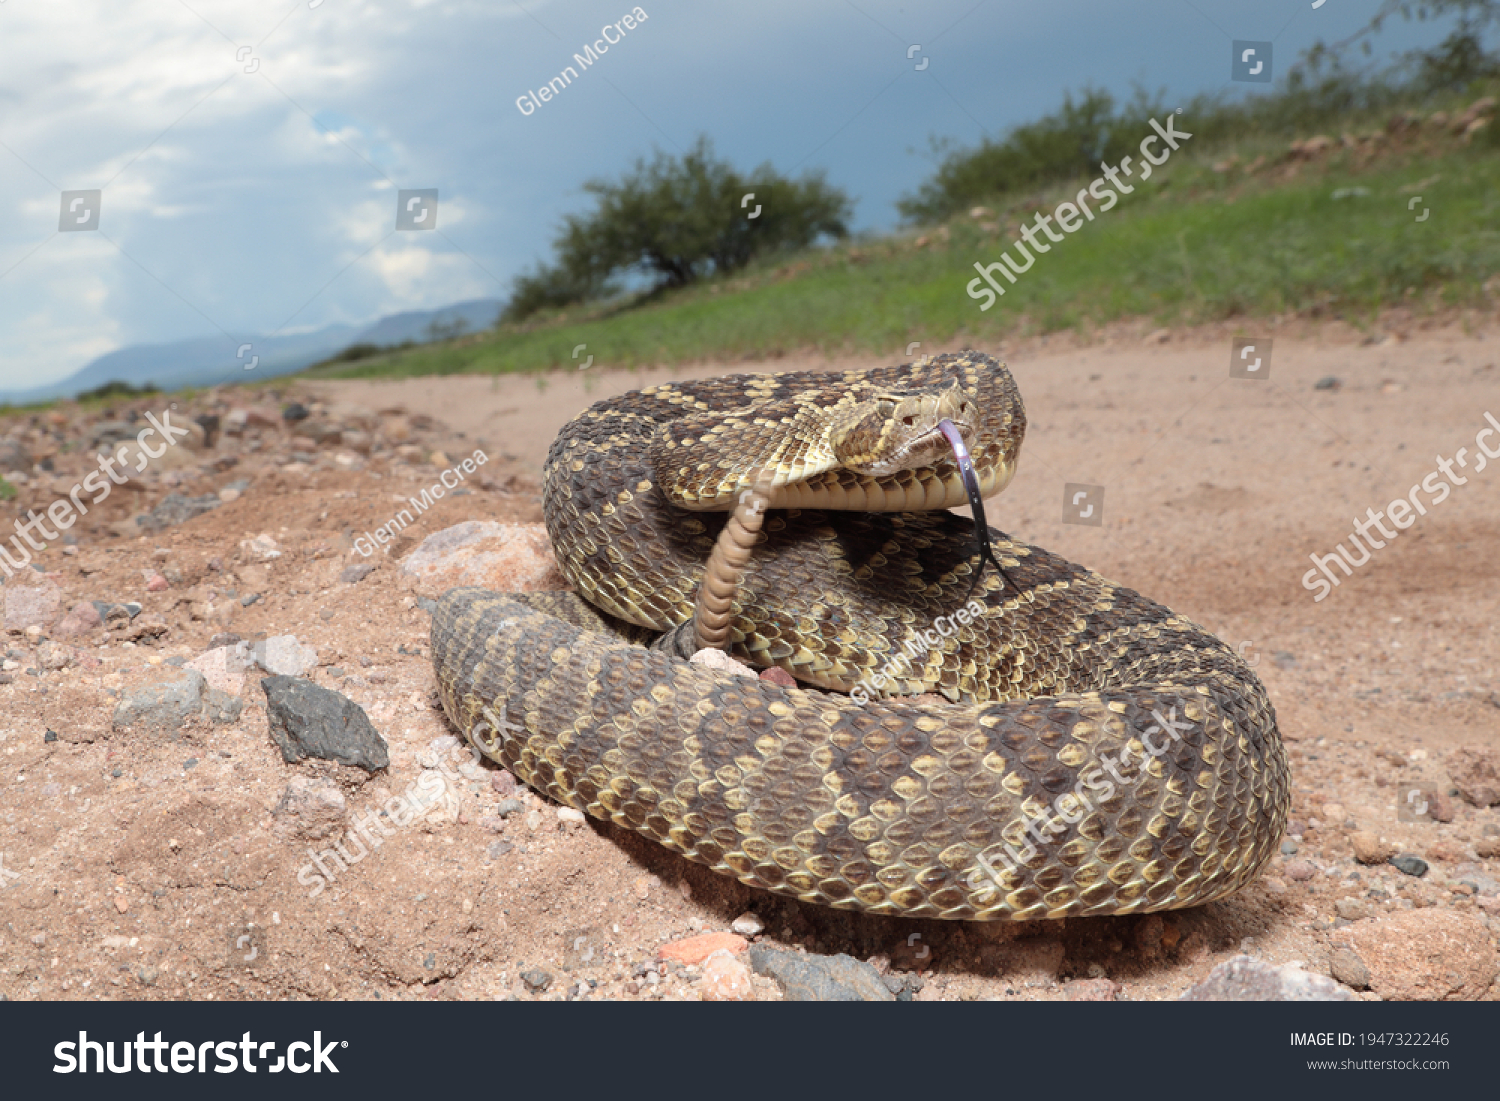 Mojave Rattlesnake (Crotalus scutulatus), Hidalgo County, New Mexico #1947322246